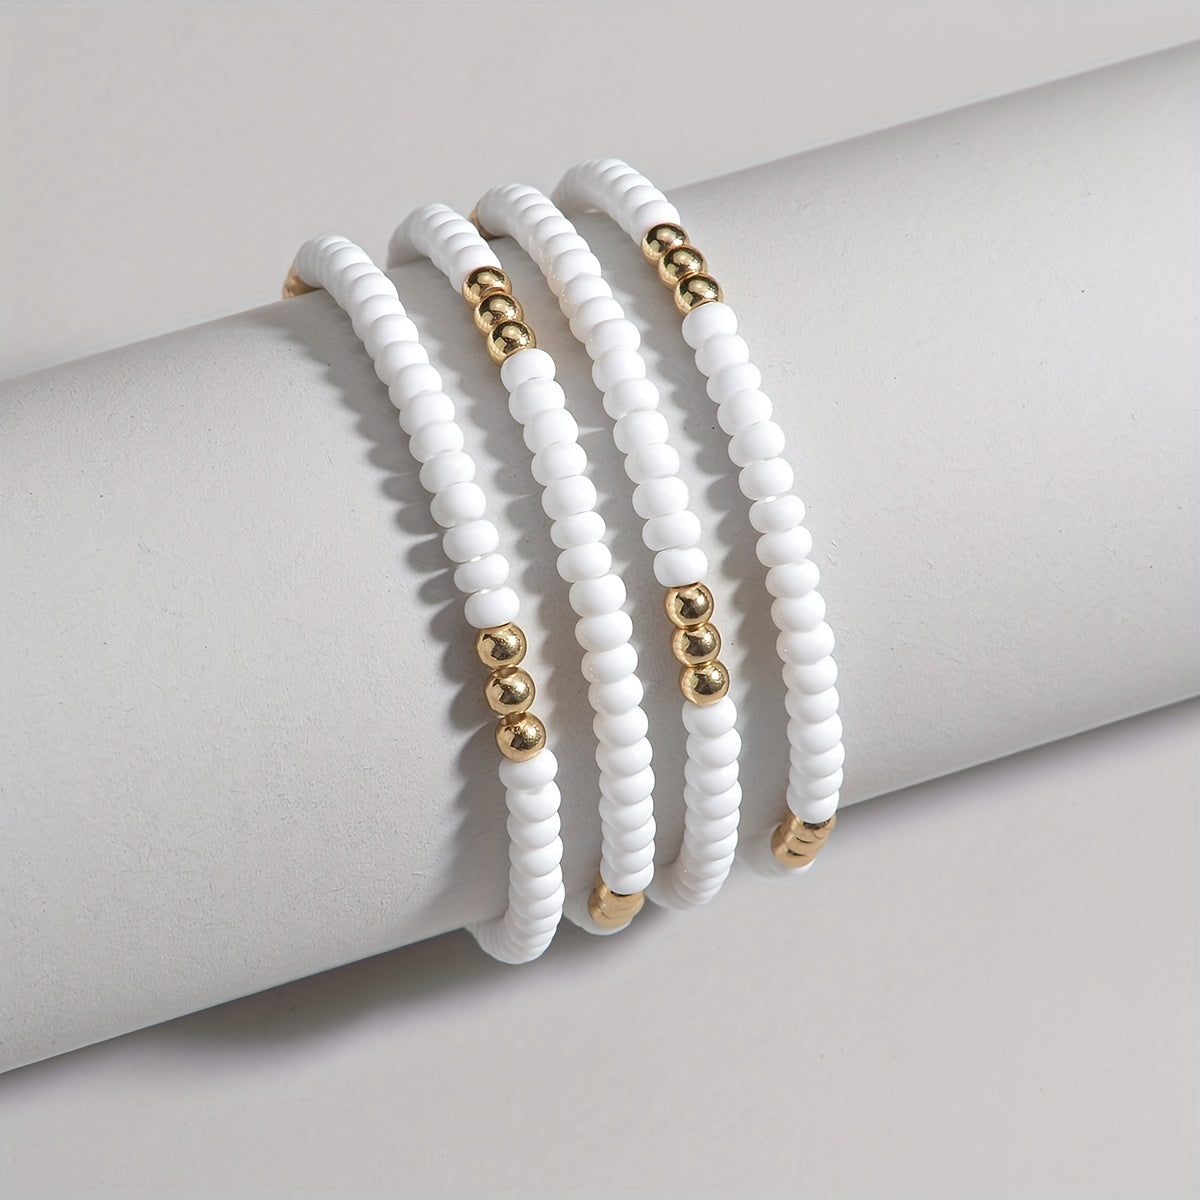 4pcs Boho White Resin Beads Bracelets Set For Women Girls Jewelry Gift Party Favors